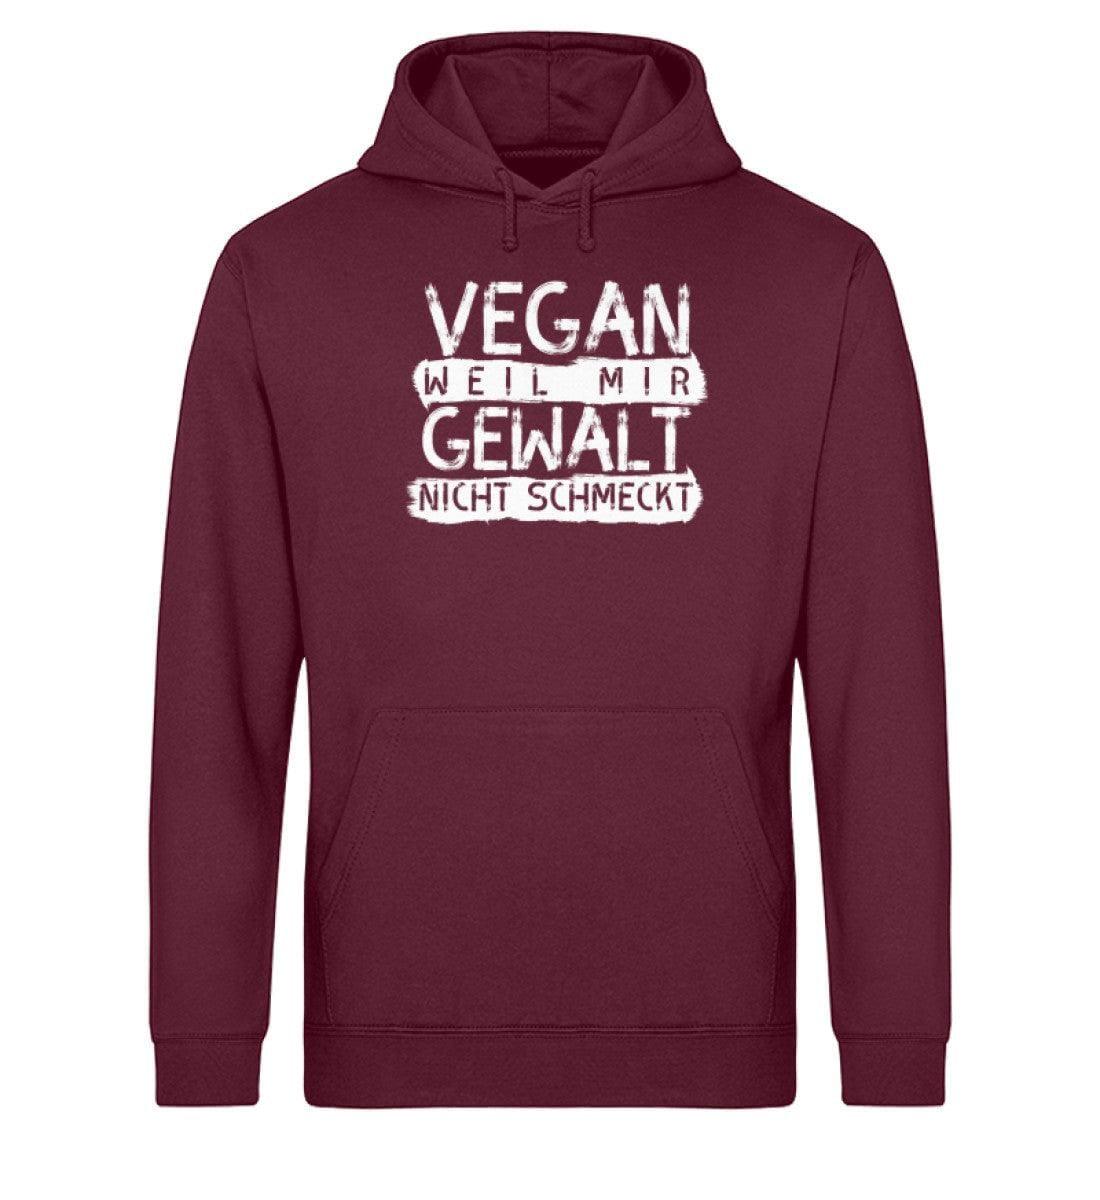 Vegan weil mir Gewalt nicht schmeckt - Unisex Organic Hoodie - Team Vegan © vegan t shirt